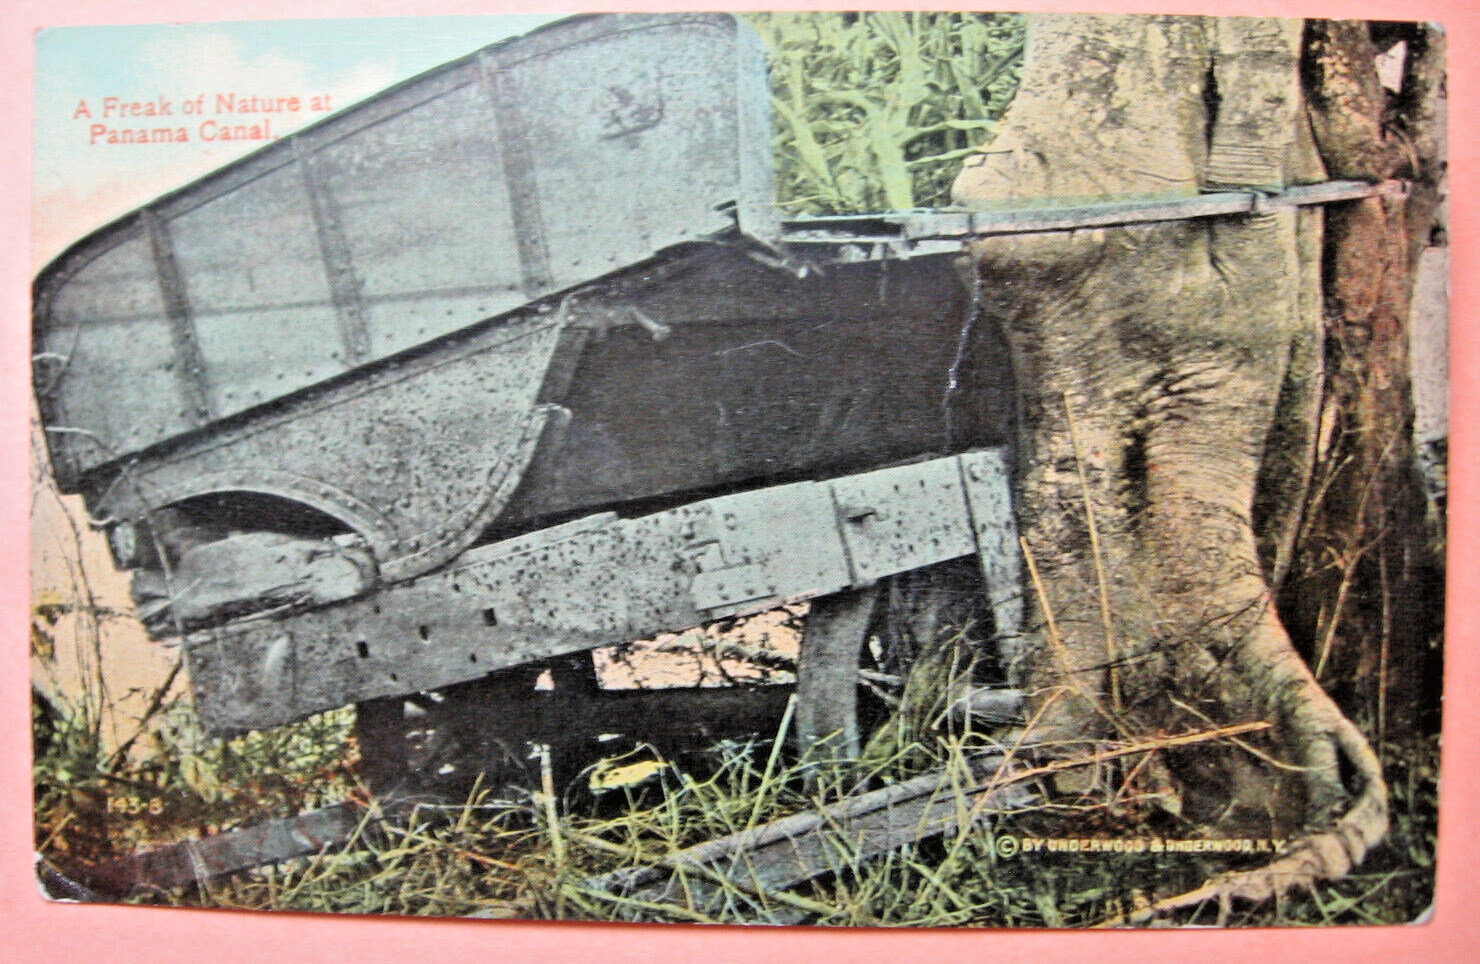 Abandoned French Rail Car - Panama Canal unused 1910 era postcard